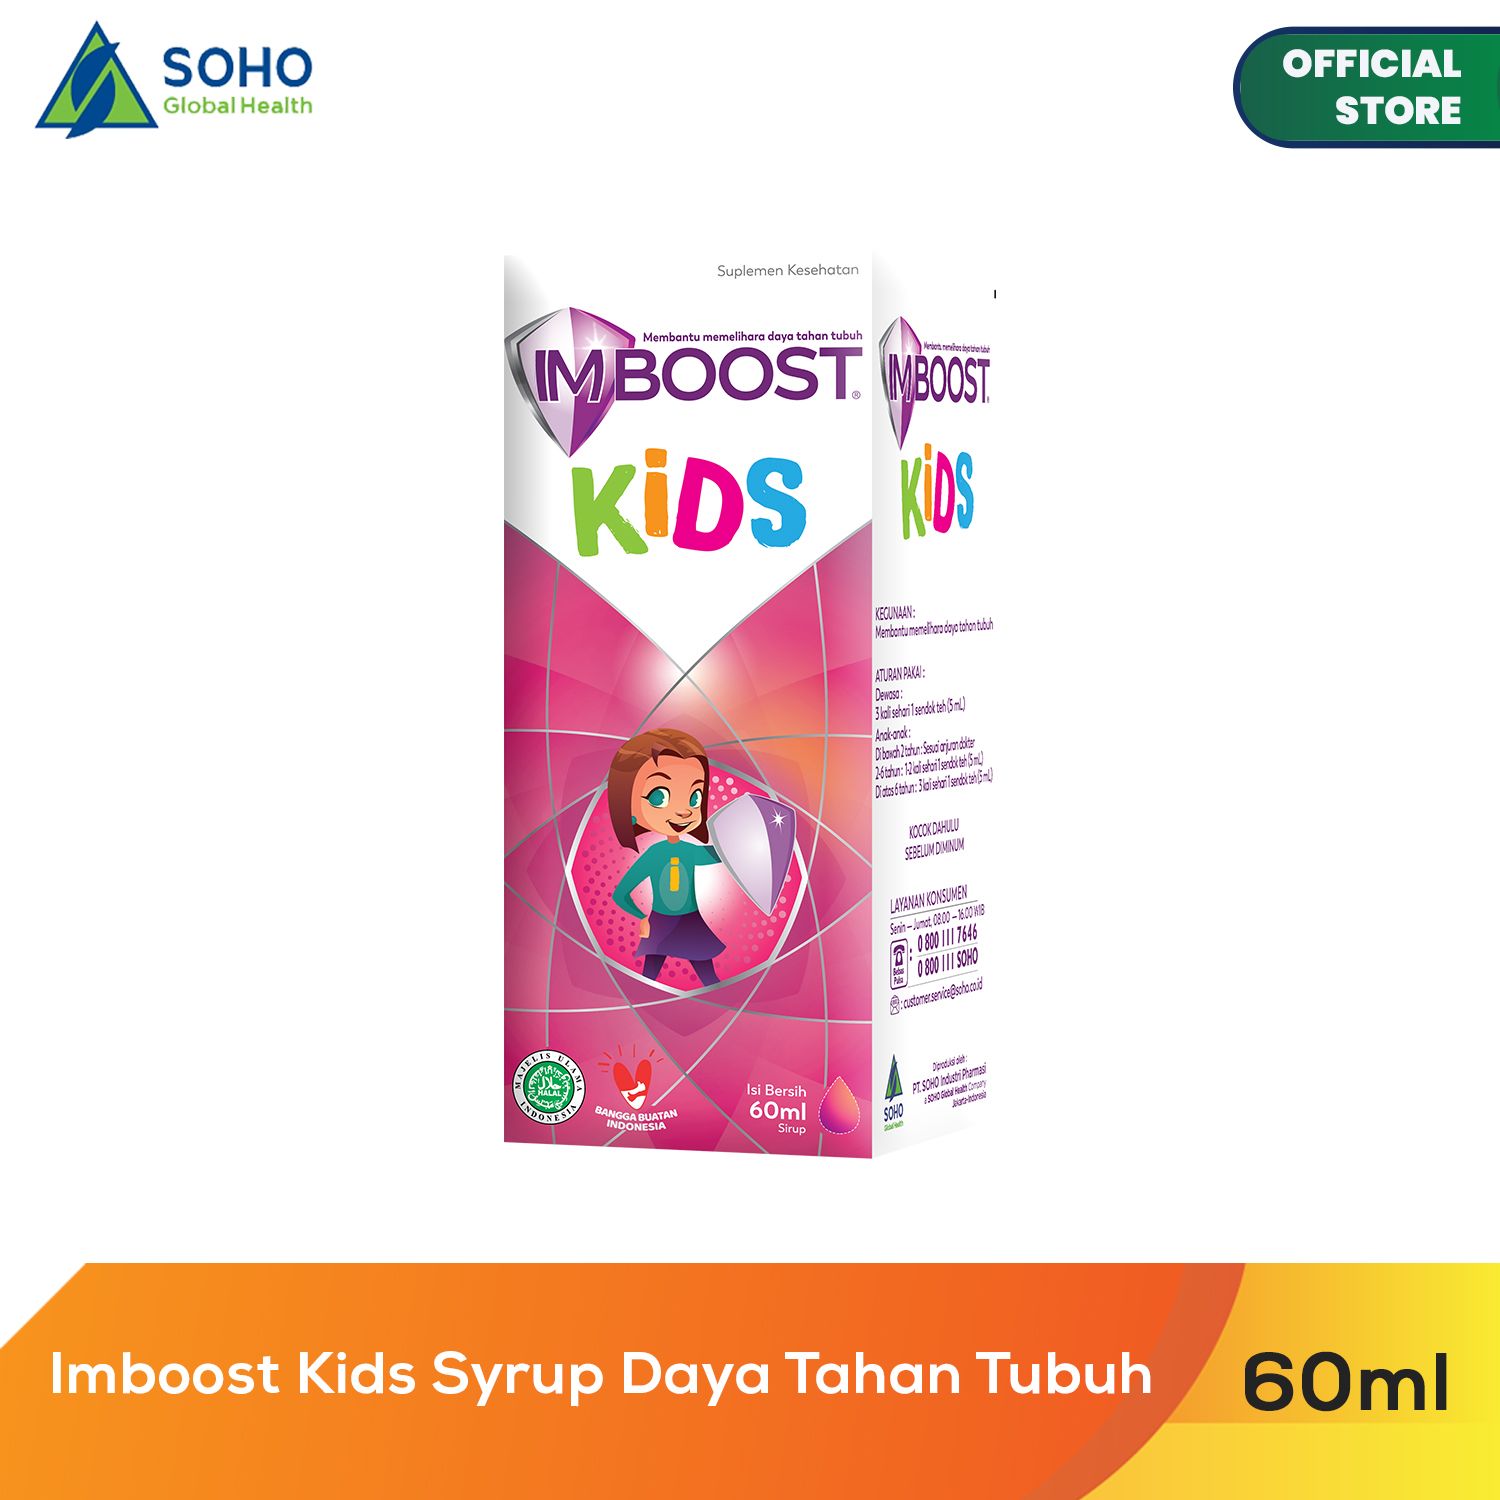 Imboost Kids Syrup Btl 60ml - 1